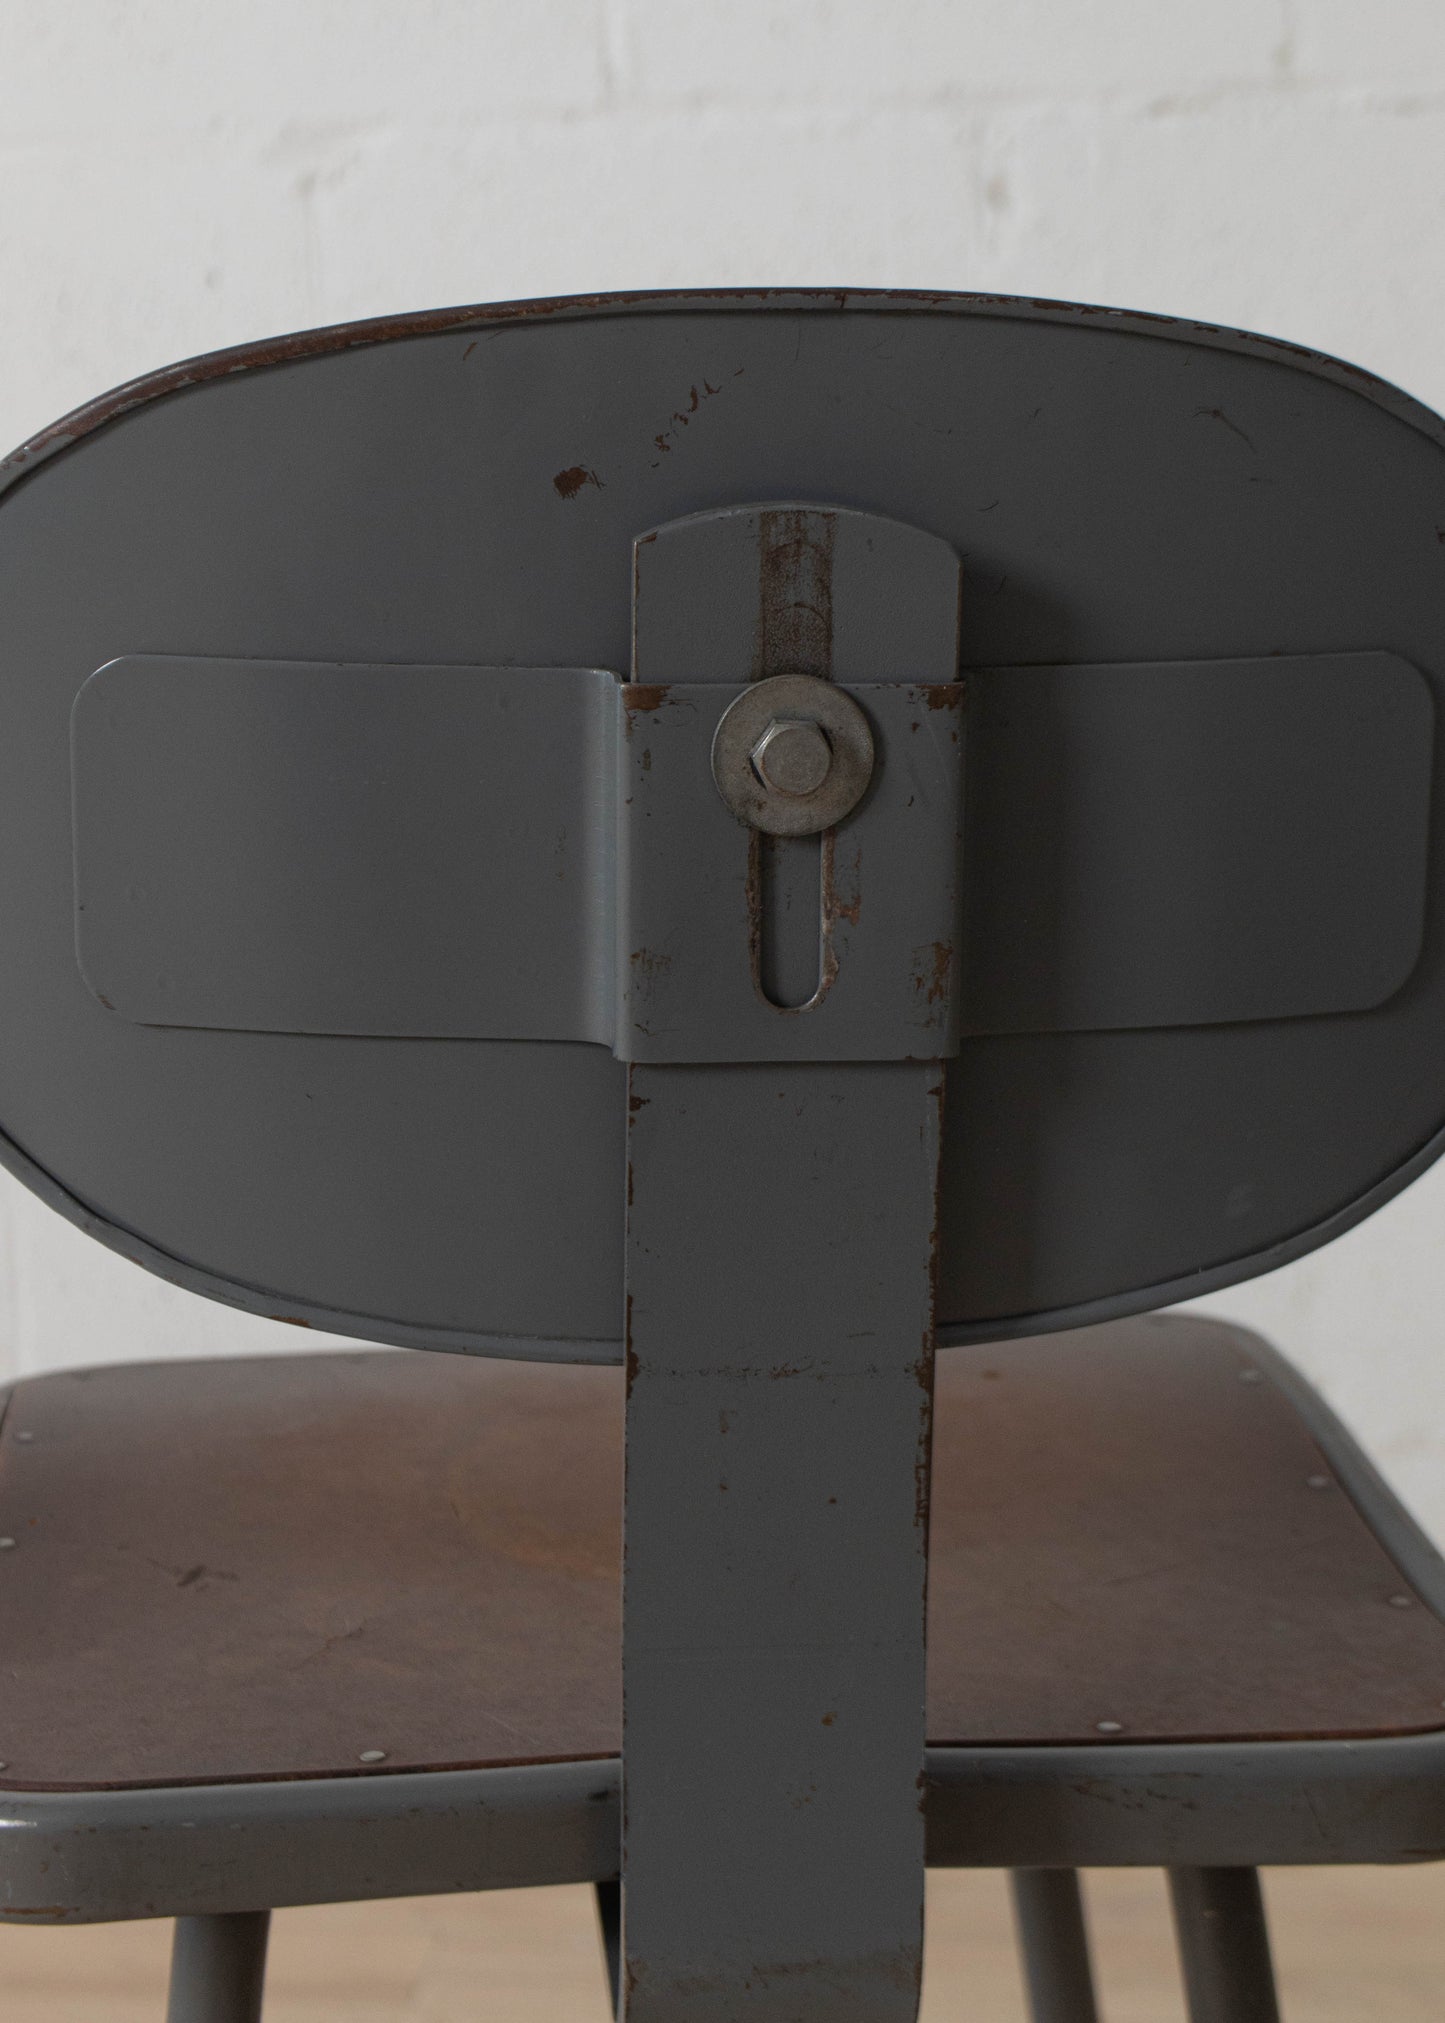 1960s/1970s Industrial Metal Chair